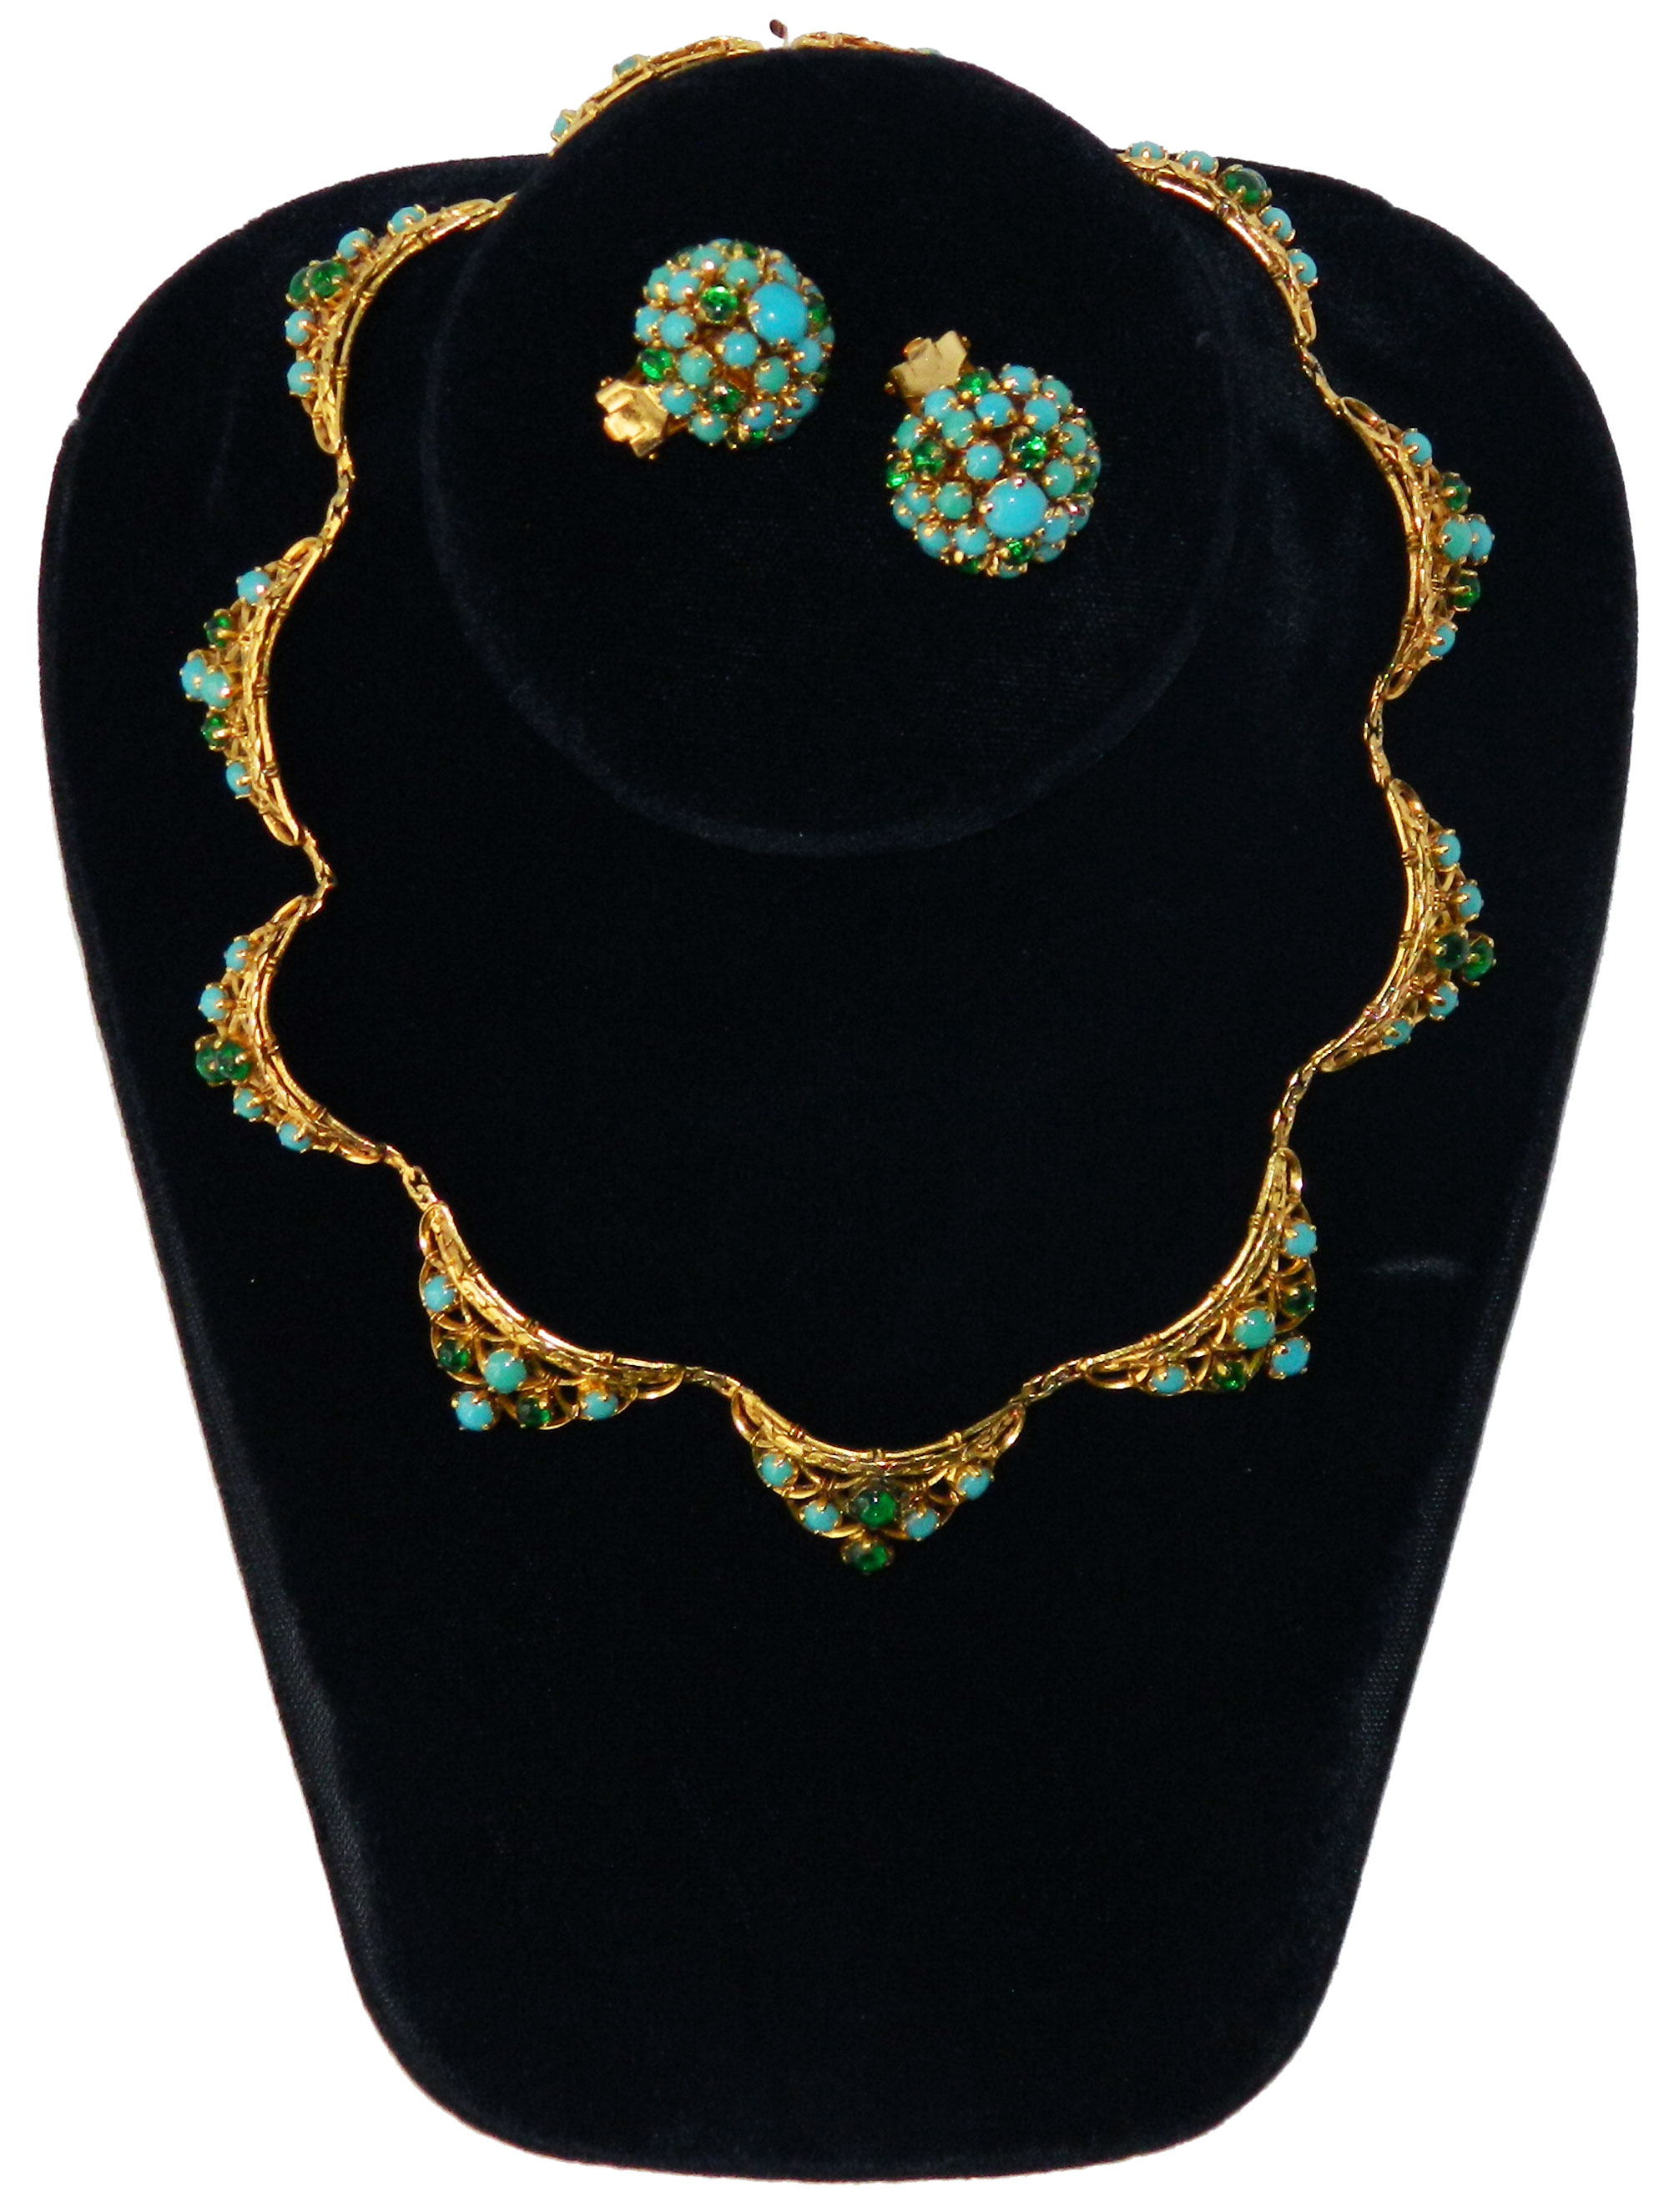 1960s Christian Dior rhinestone necklace set